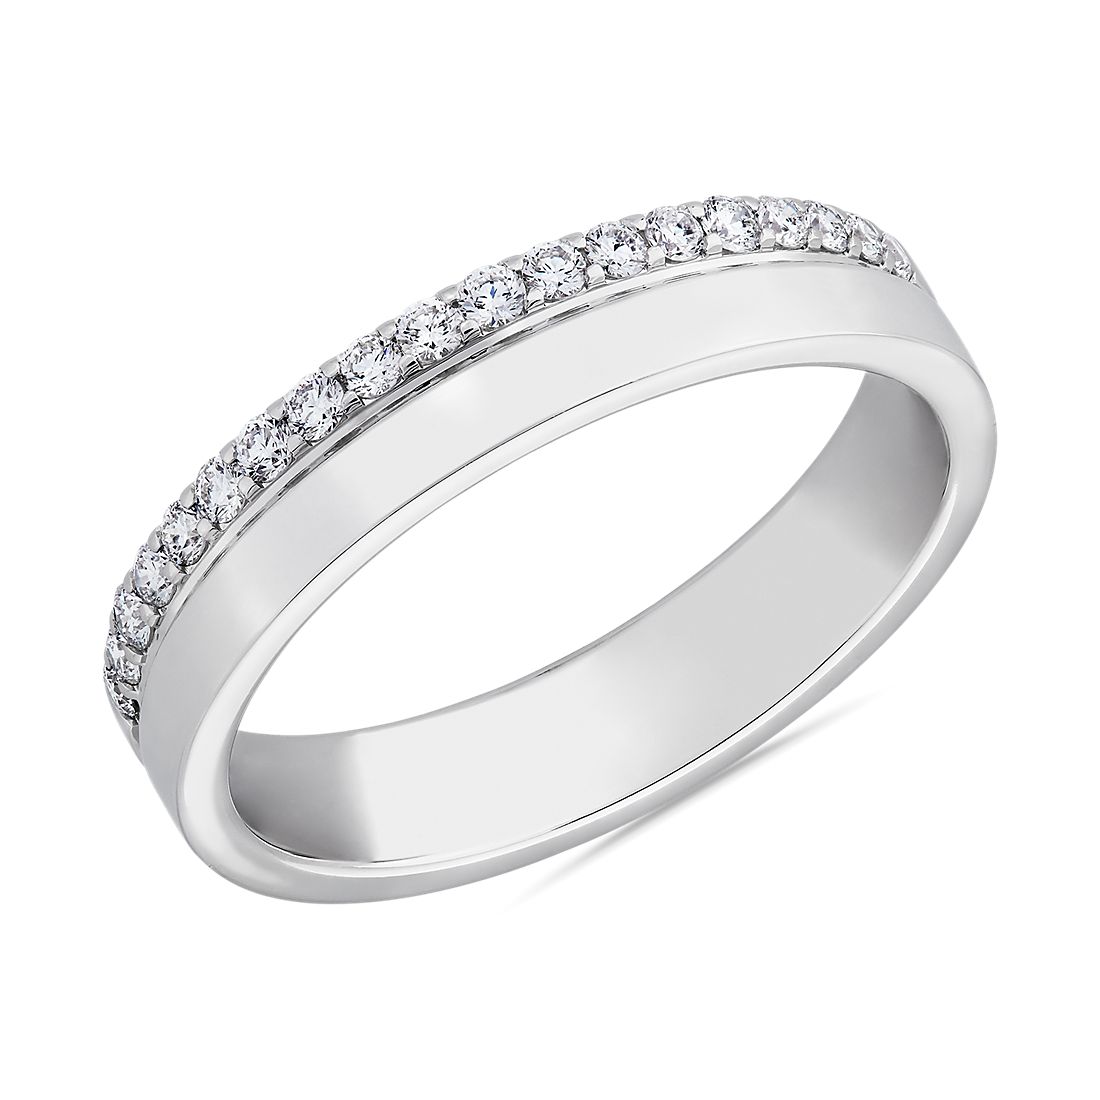 ZAC ZAC POSEN Diamond Edge Ring in 14k White Gold (4 mm, 1/5 ct. tw.)